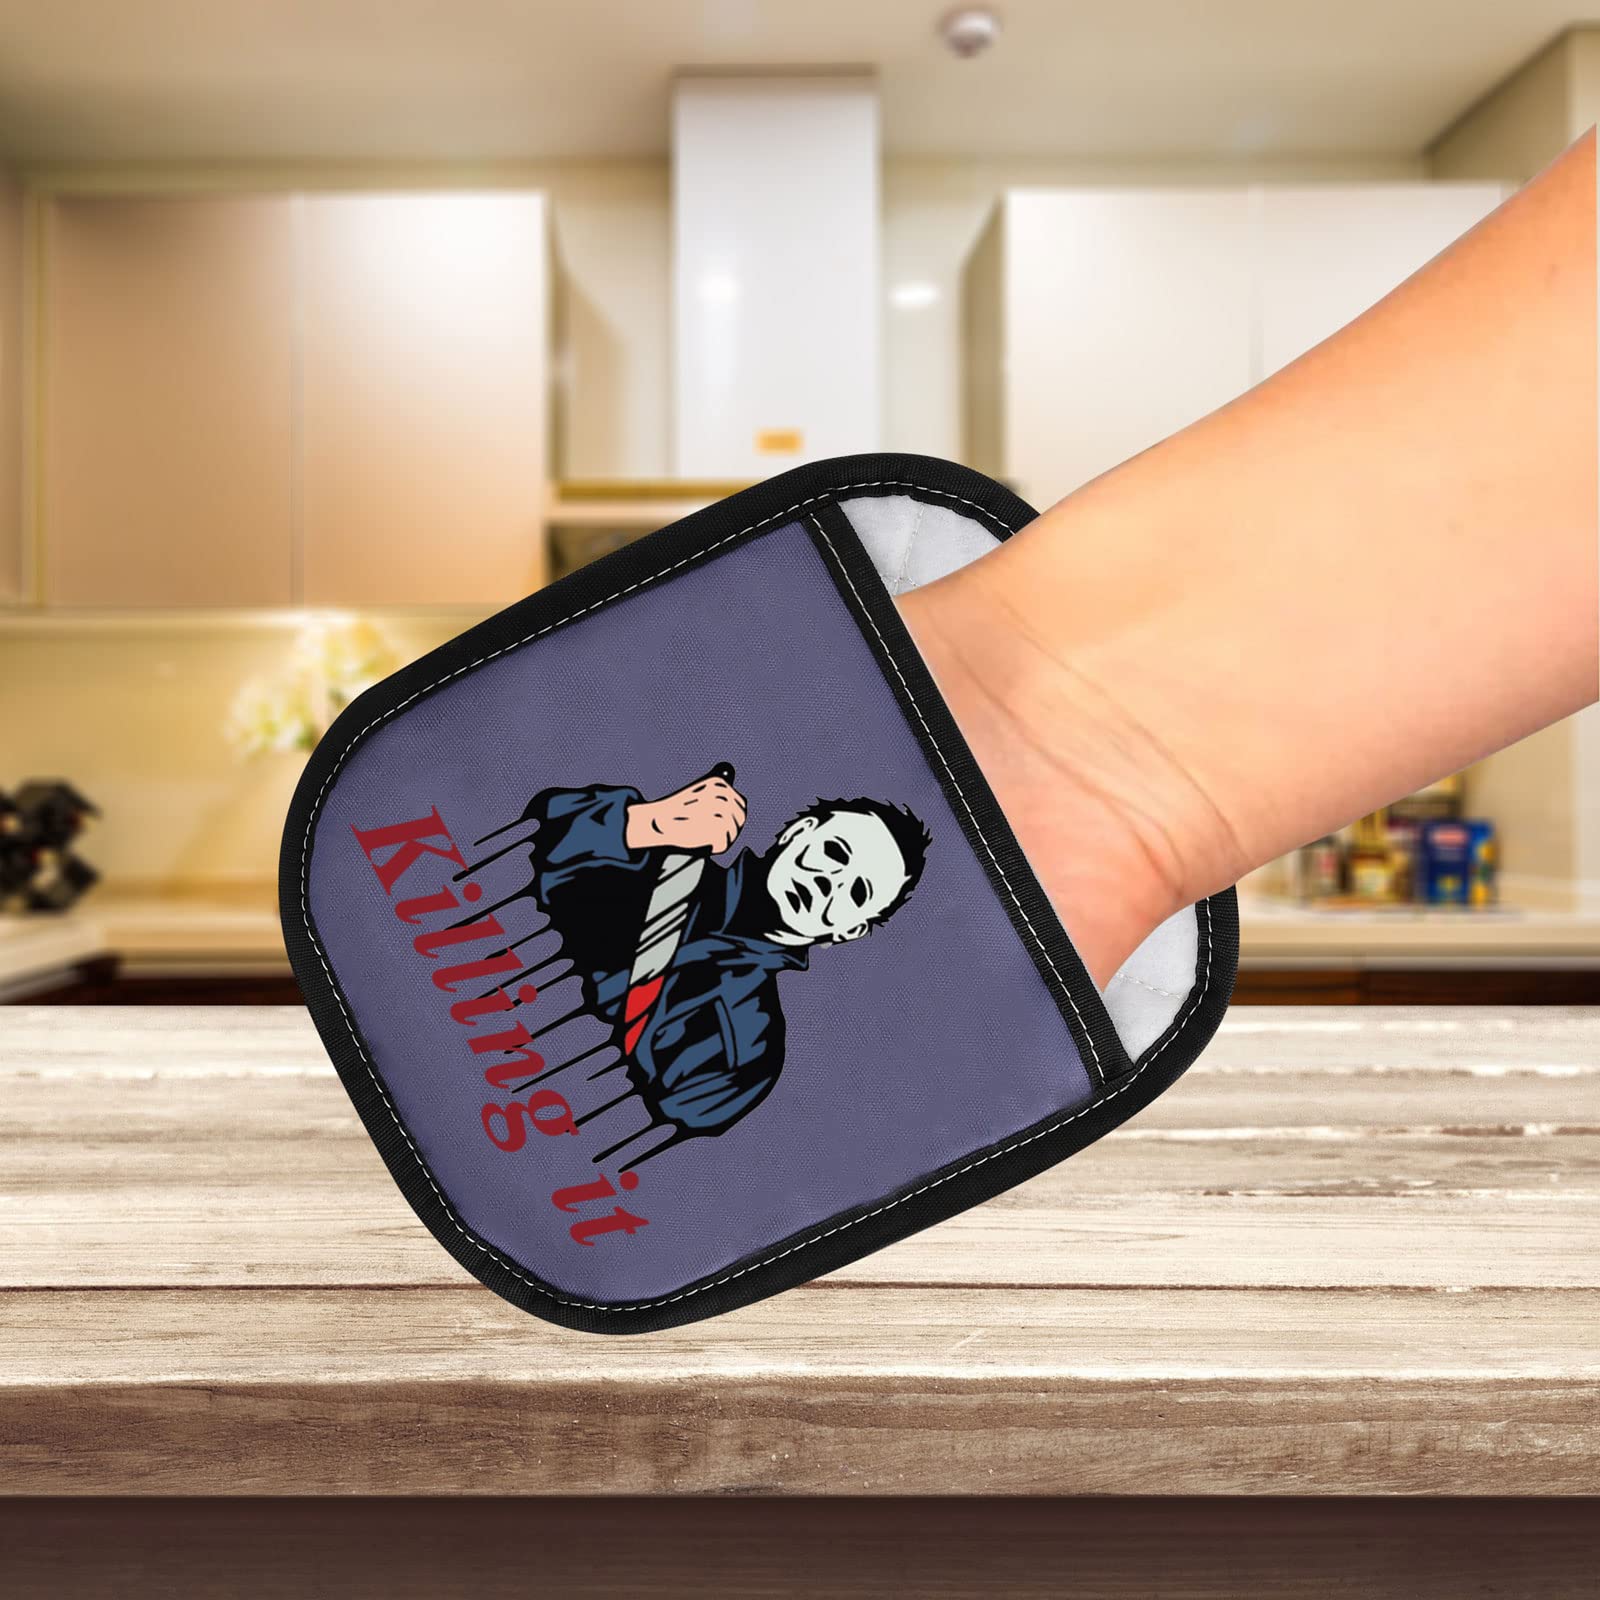 WZMPA Horror Movie Pot Holders Killer Fans Gift Killing It Kitchen Baking Glove for Film Fans (Killing It Holder)